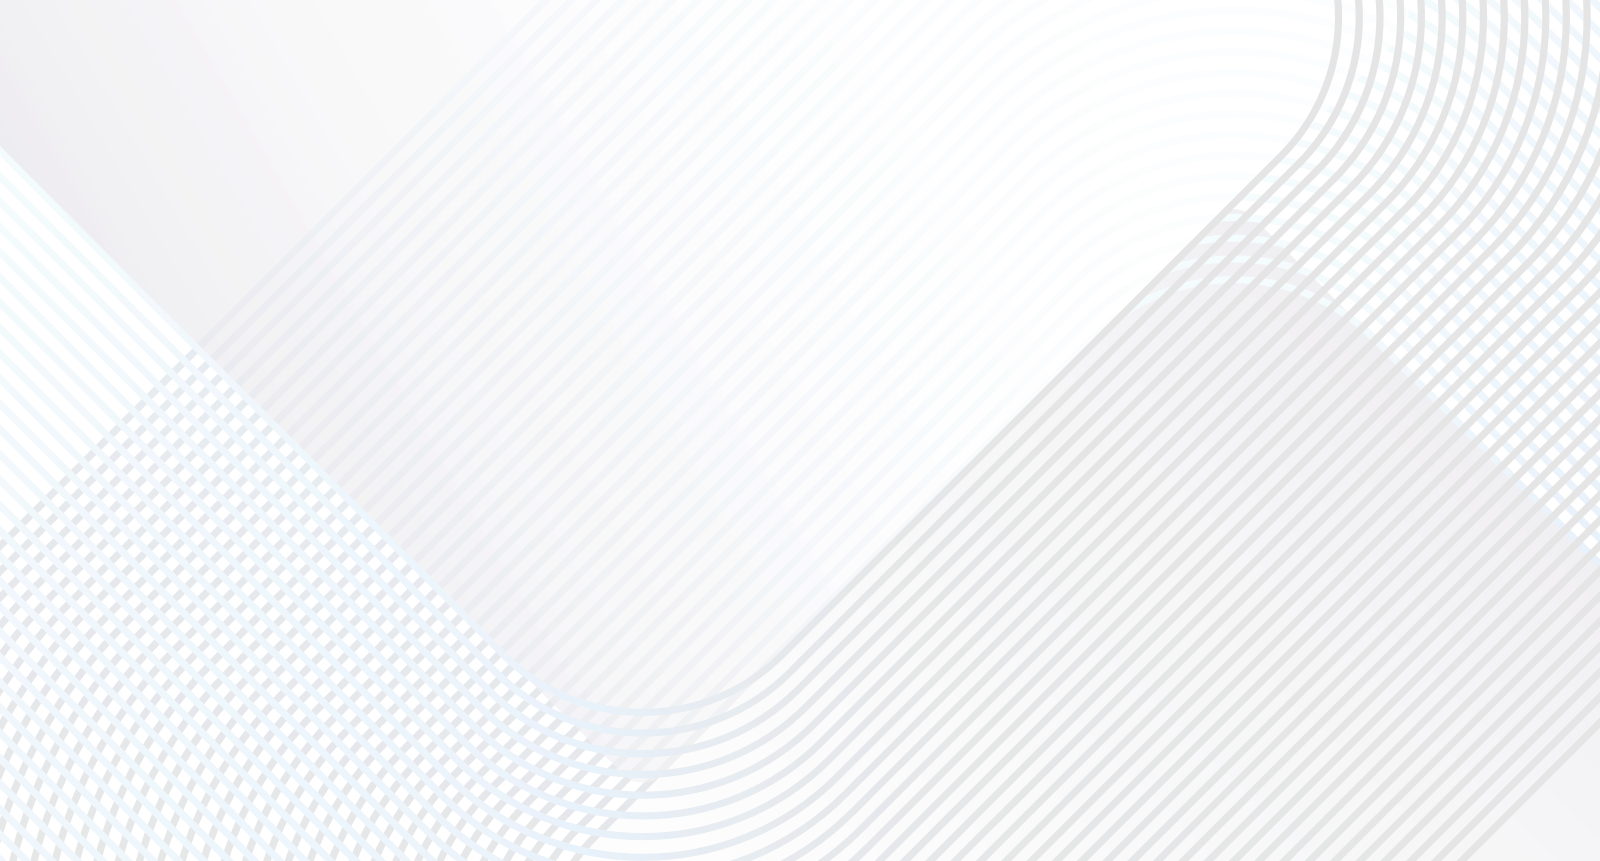 wave design overlay on image